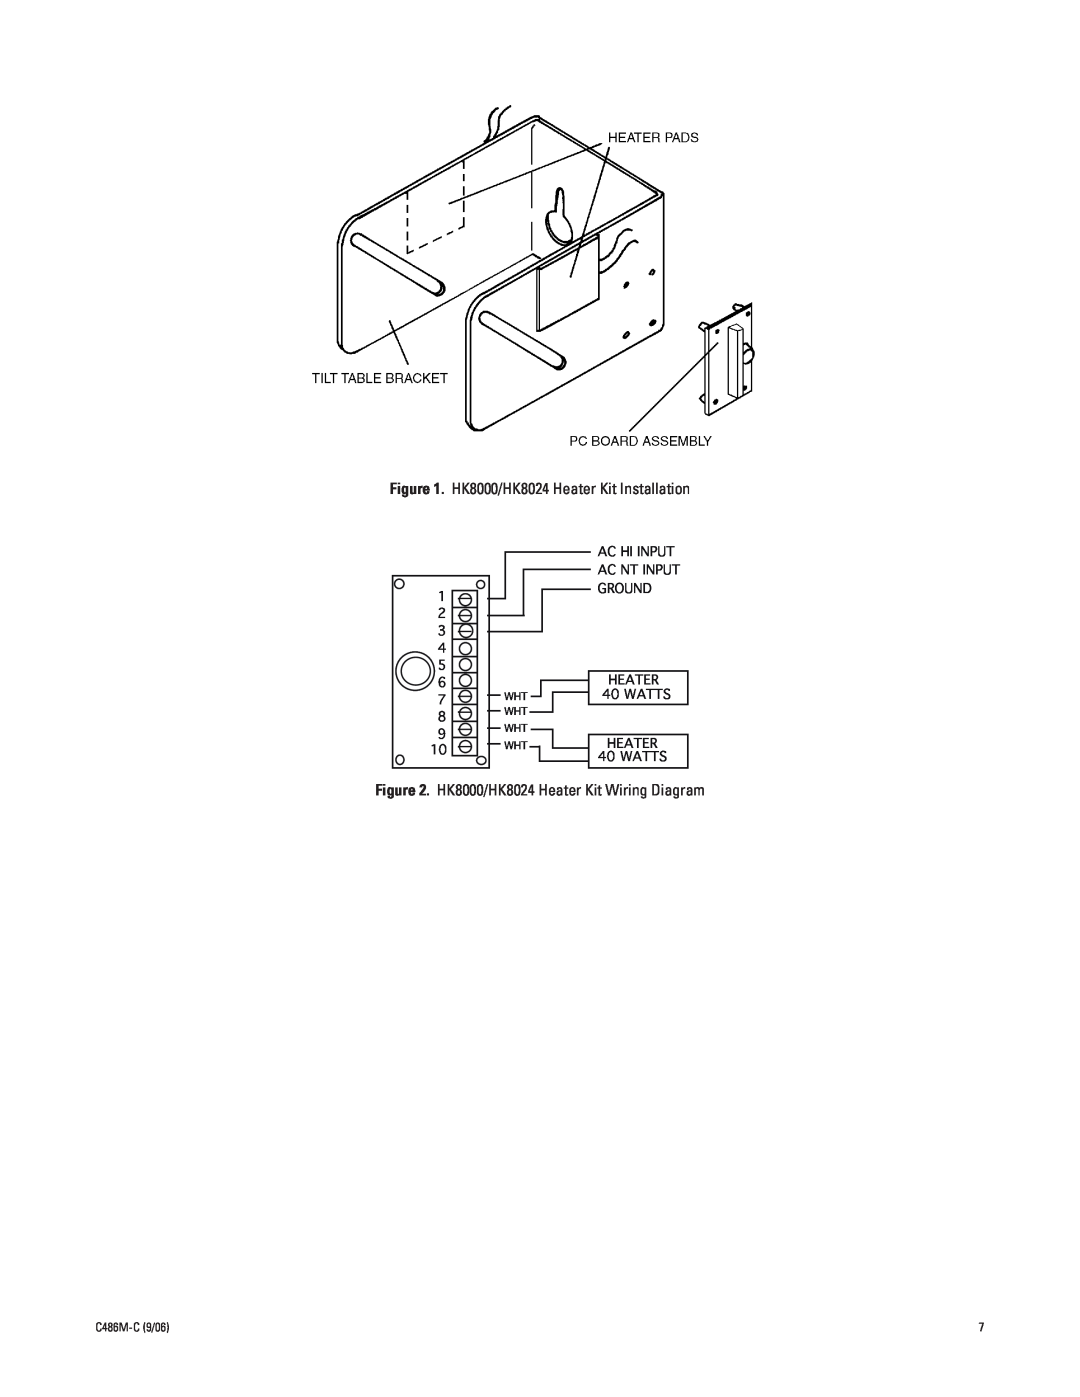 Pelco hs2500 manual HK8000/HK8024 Heater Kit Installation, HK8000/HK8024 Heater Kit Wiring Diagram, 1 2 3 4 5 6 7 